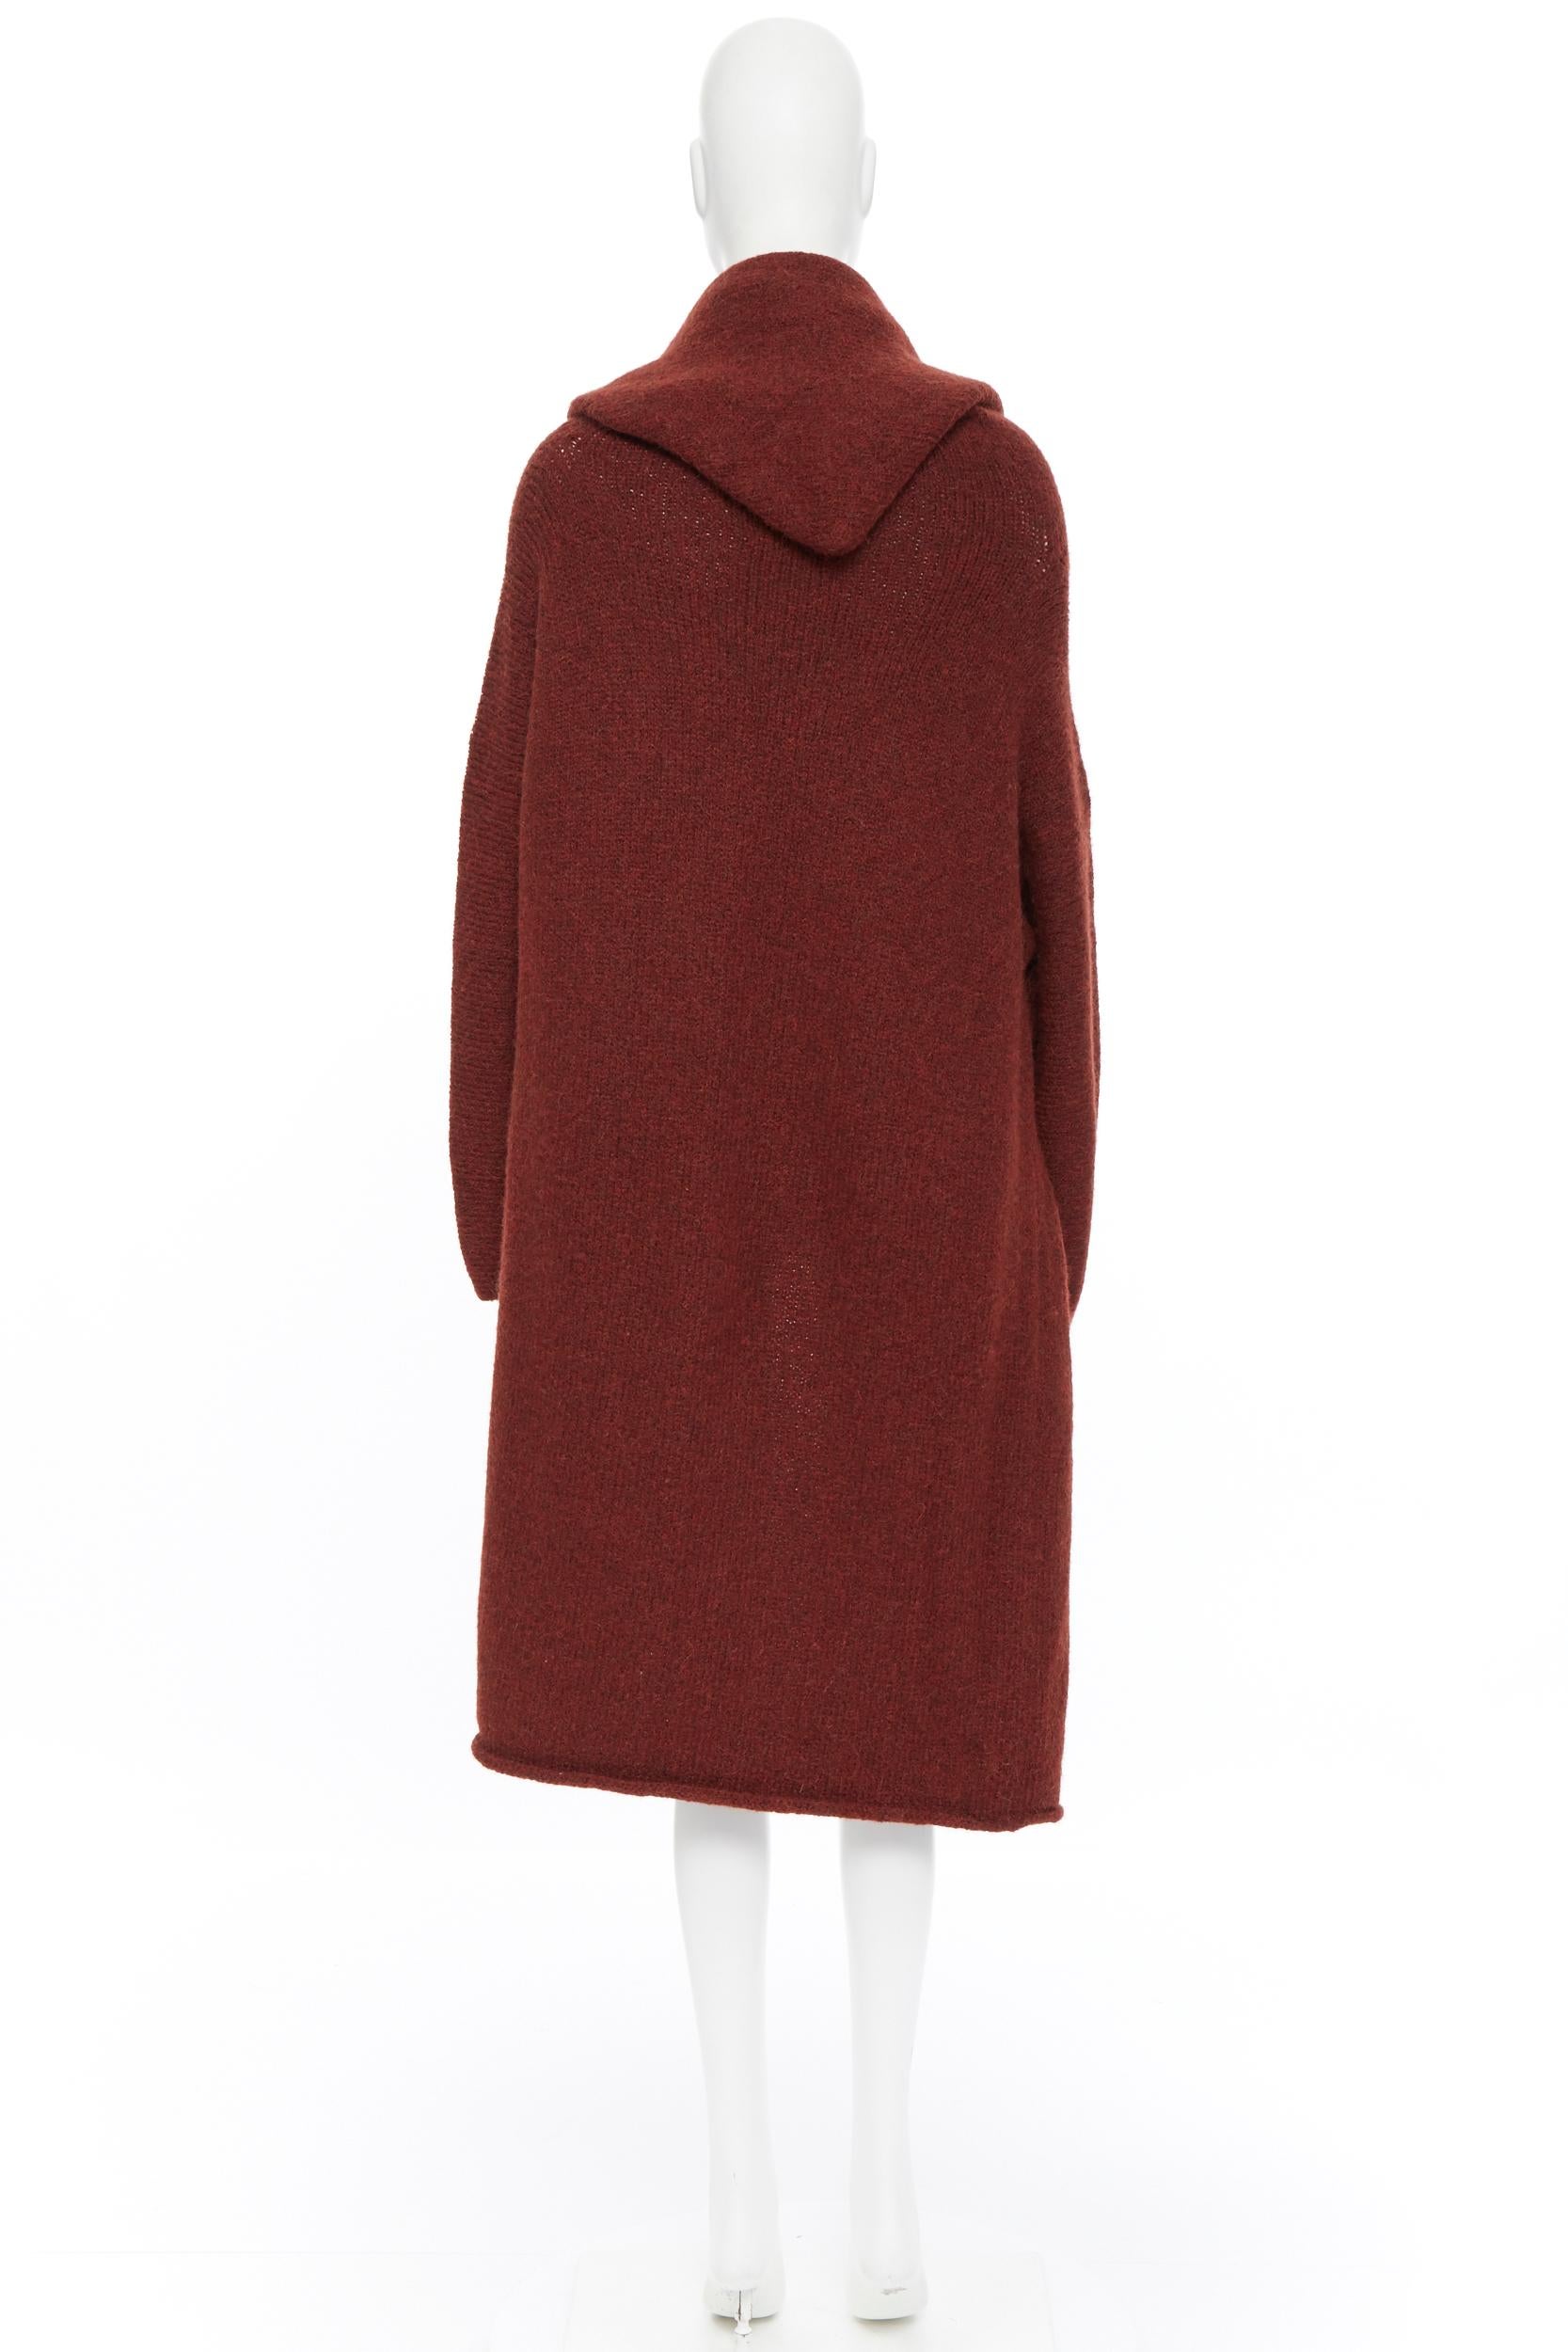 Brown LAUREN MANOOGIAN maroon brown hand loomed alpaca wool oversized coat cardigan